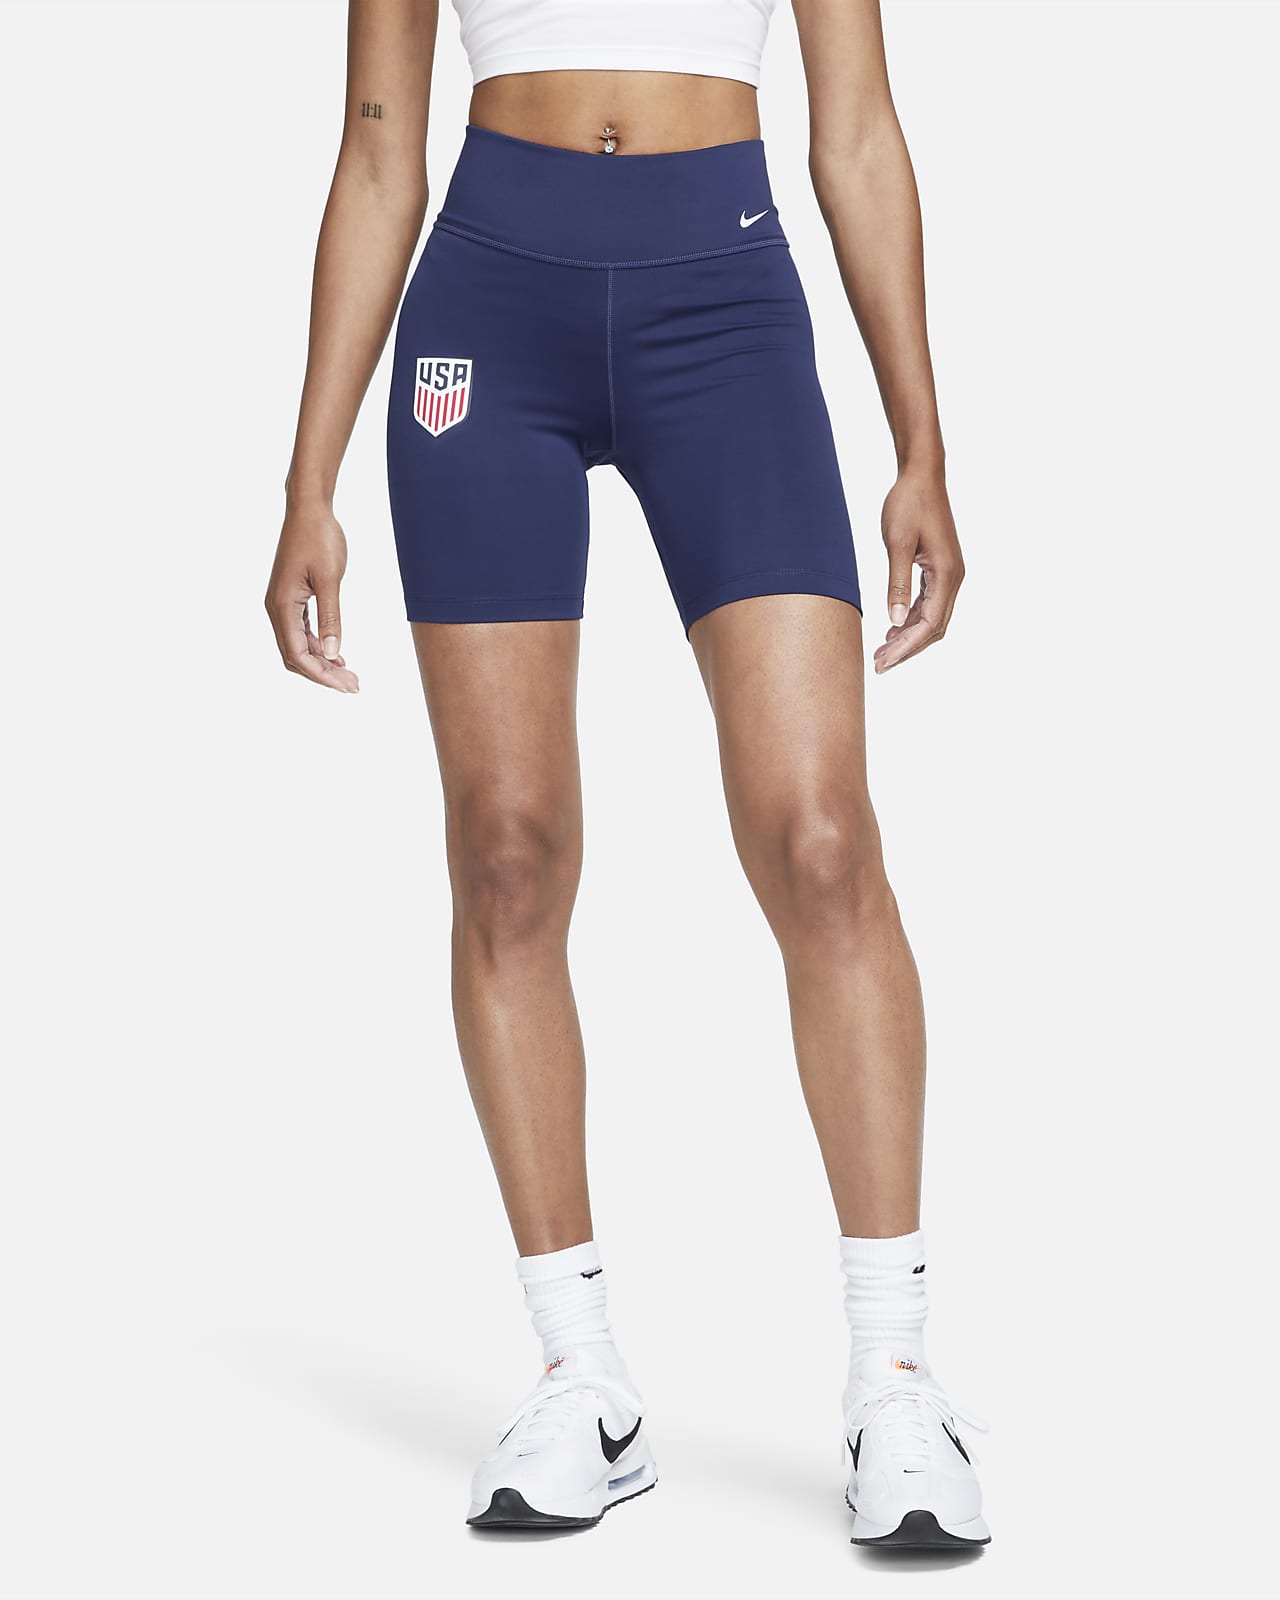 Nike Women's Essential Mid-Rise Bike Activewear Shorts - Dark Grey Hea